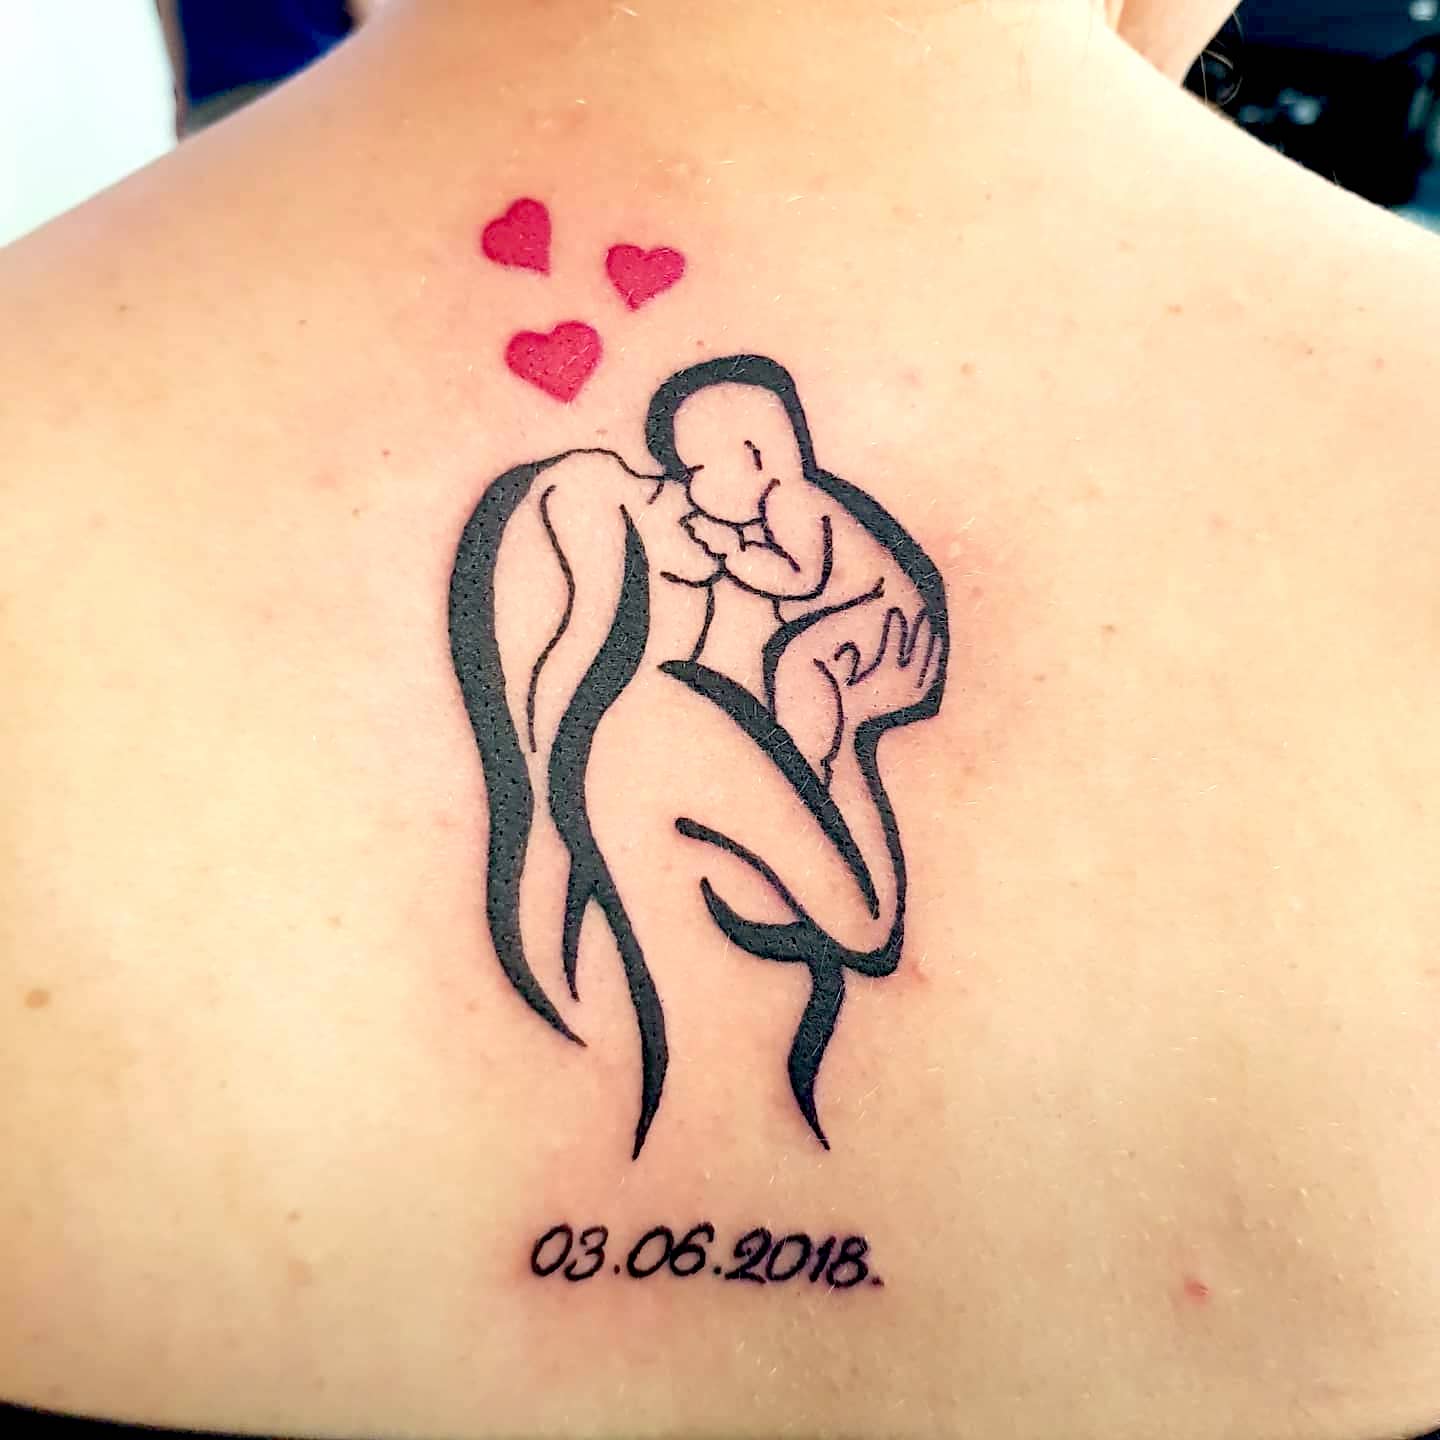 Tattoo Anansi München studio Vedran symbol hearts birthdate love of a mom outlines